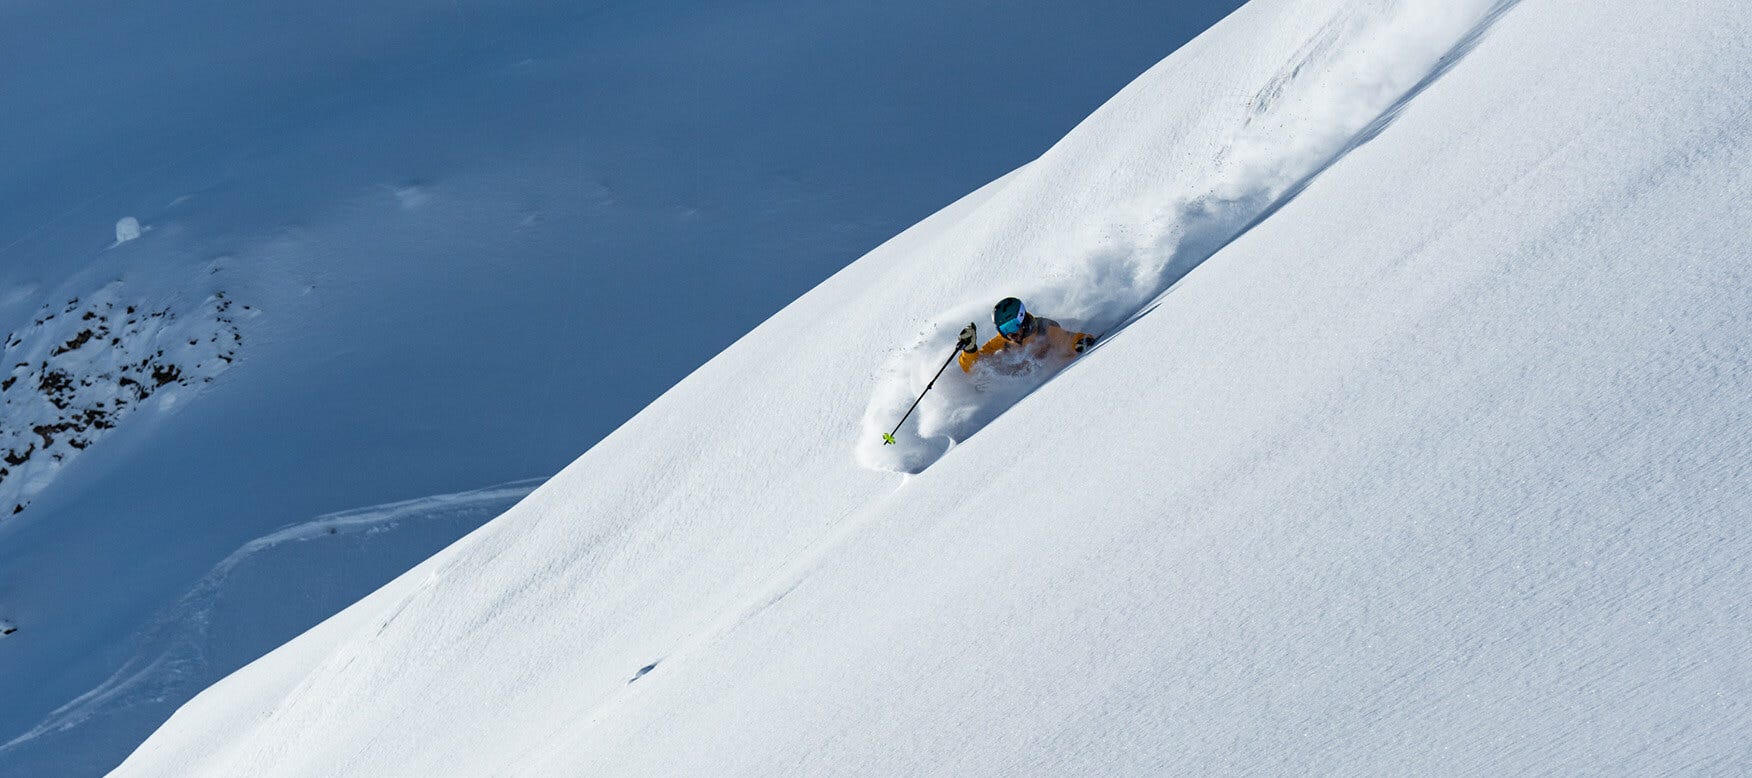 Marcus Caston skiing in deep powder